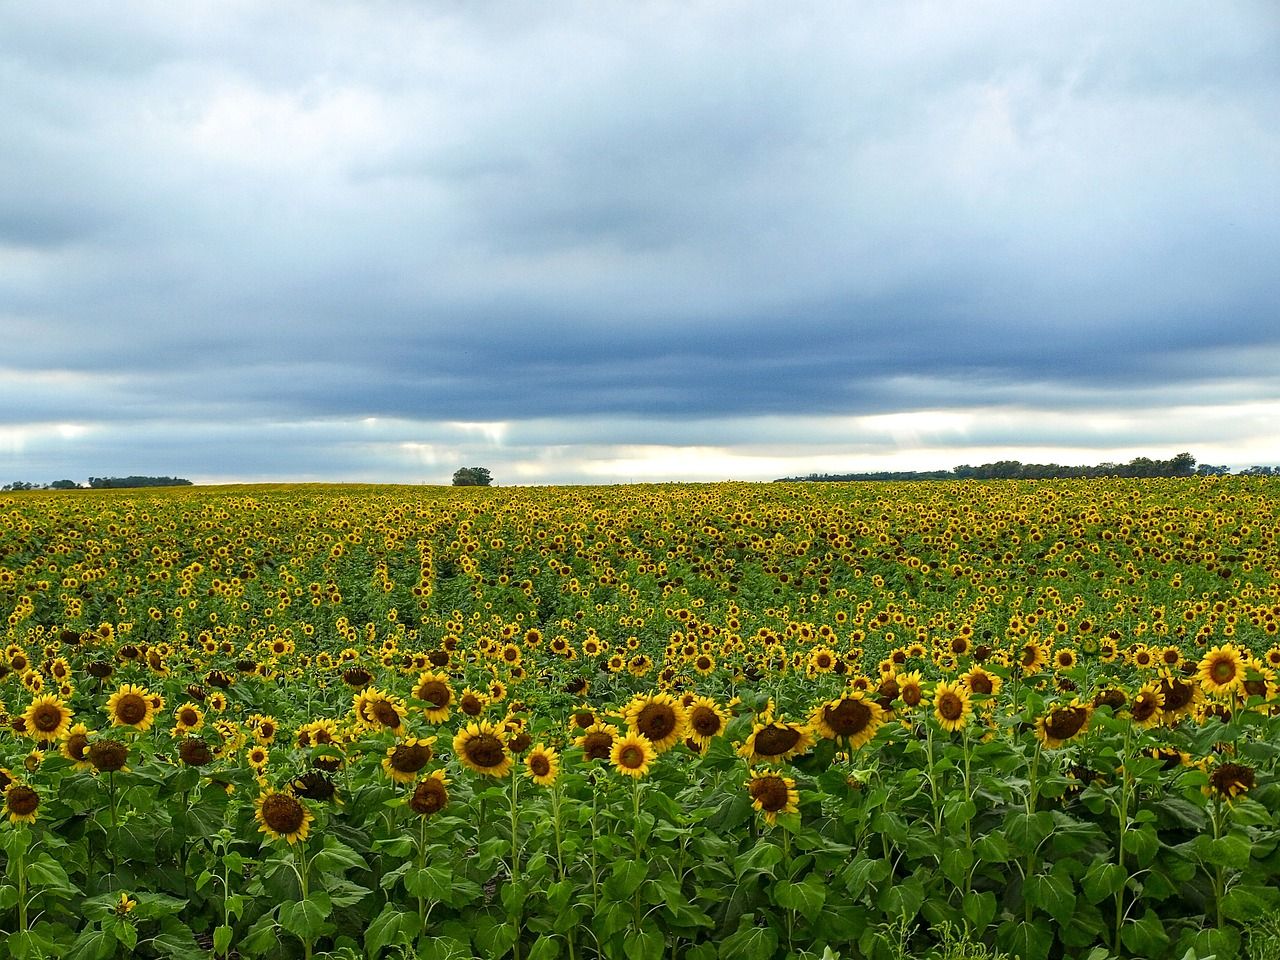 A field of sunflowers under a gray sky in North Dakota